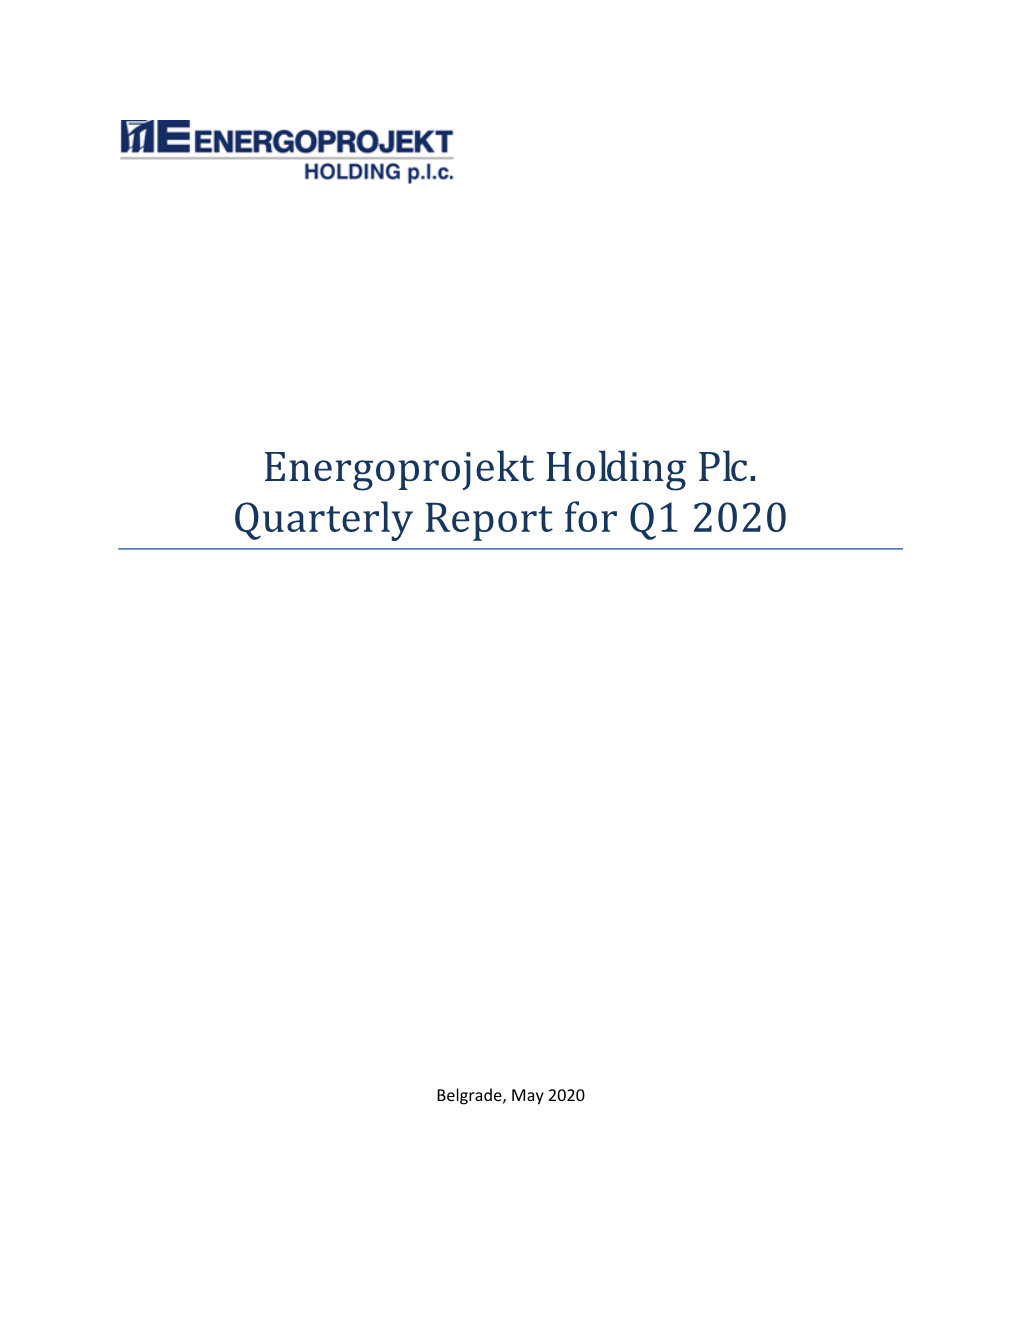 Energoprojekt Holding Plc. Quarterly Report for Q1 2020